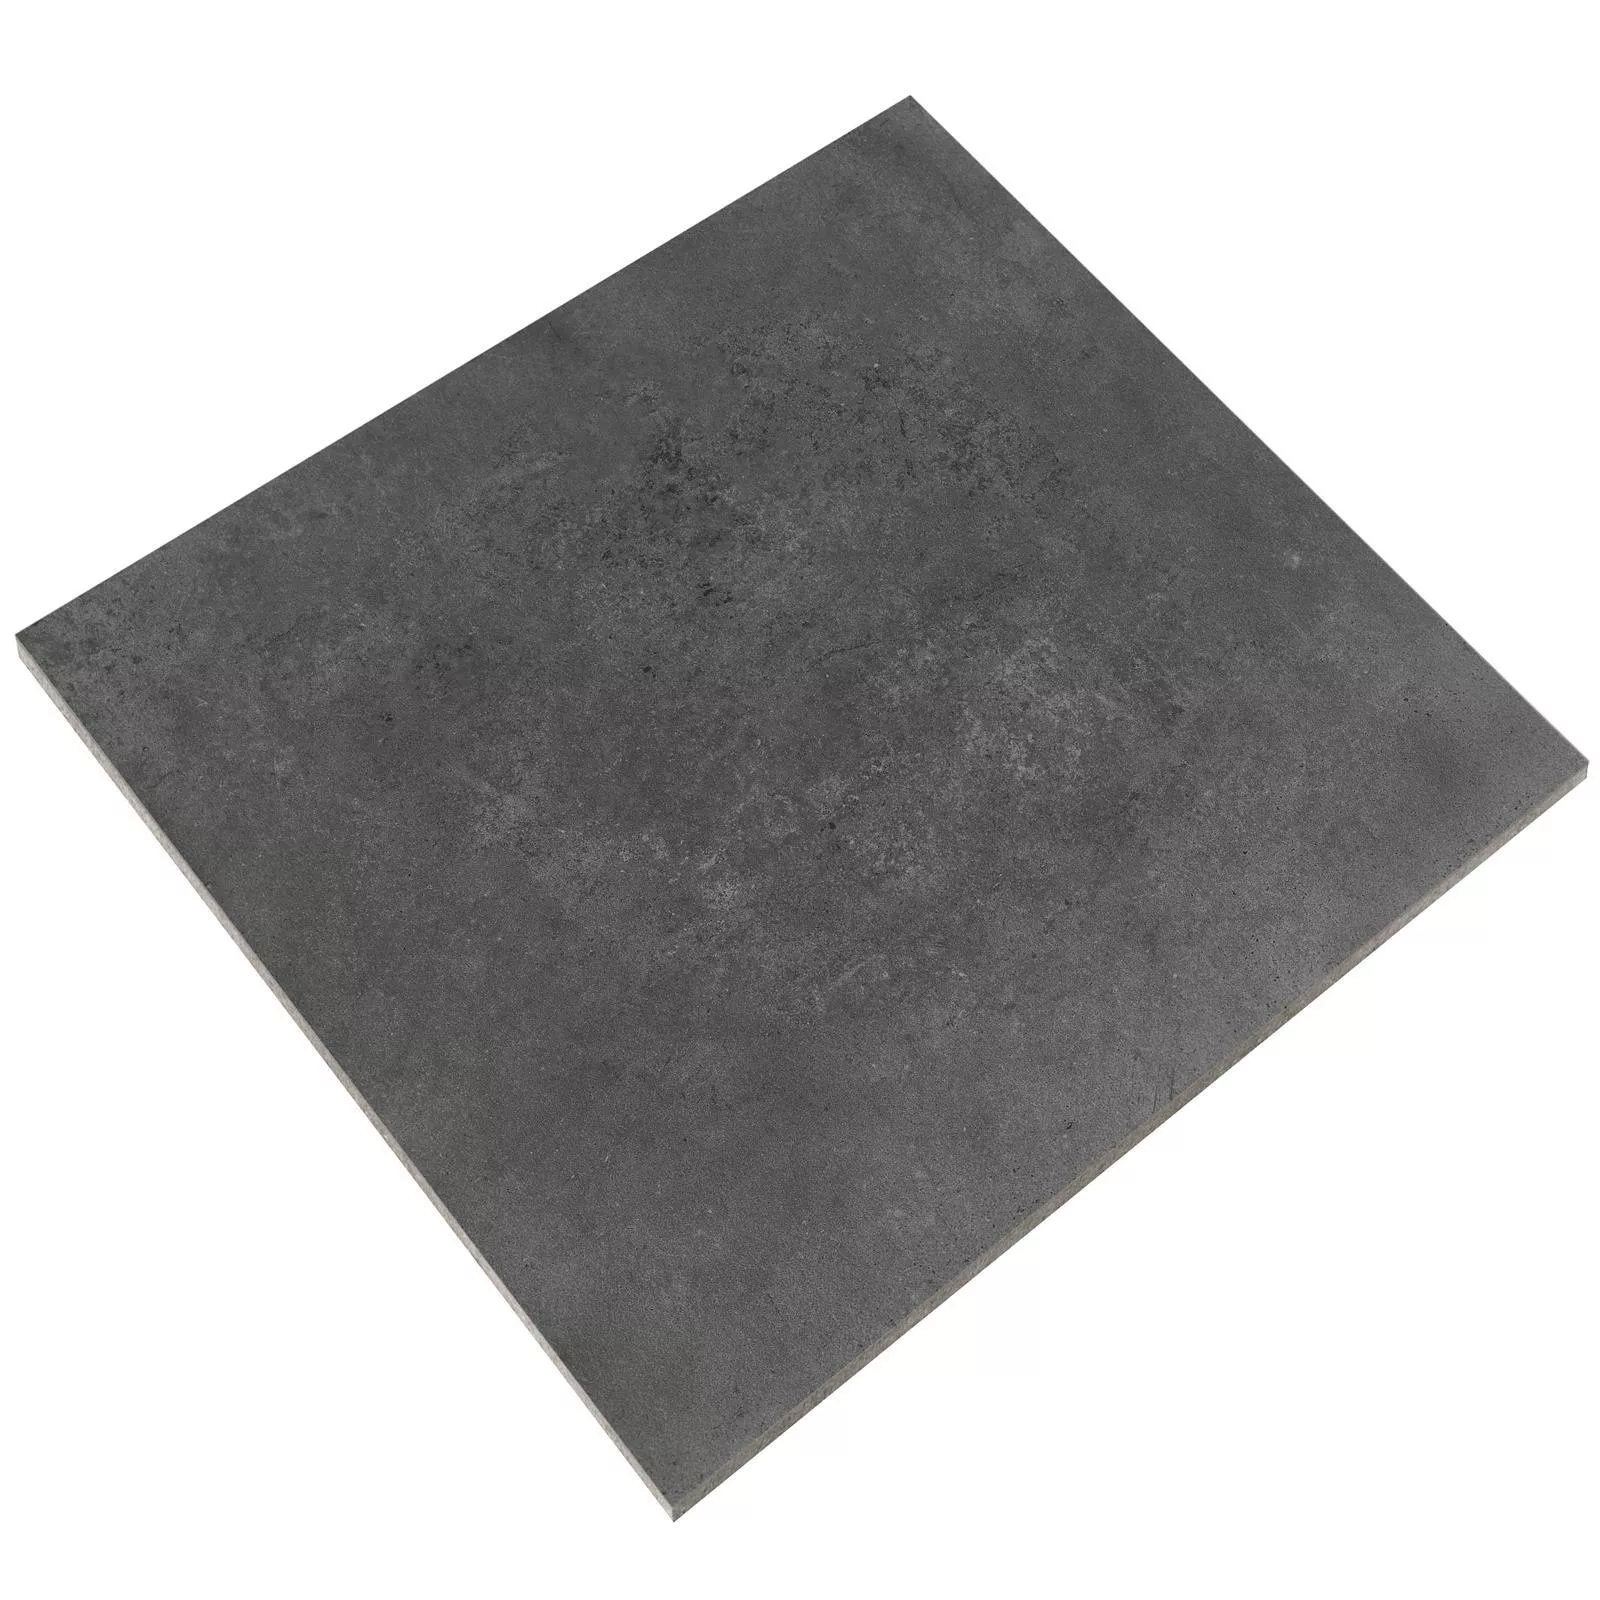 Vloertegels Cement Optic Nepal Slim Donkergrijs 100x100cm